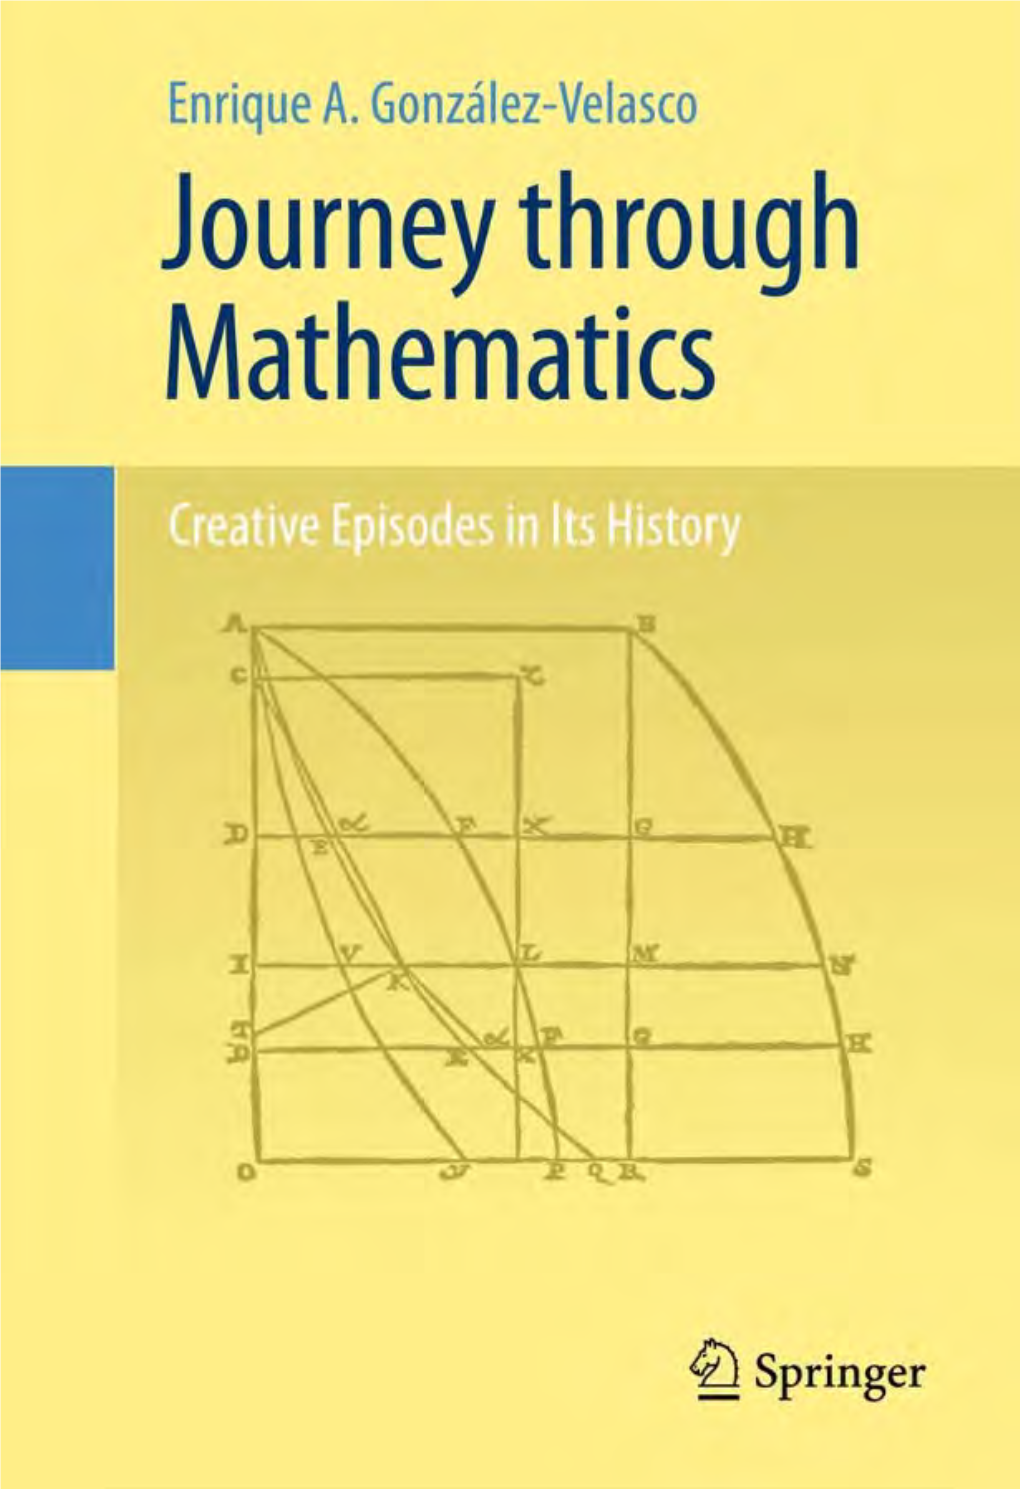 Journey Through Mathematics: Creative Episodes in Its History, 1 DOI 10.1007/978-0-387-92154-9 1, © Springer Science+Business Media, LLC 2011 2 Trigonometry Chapter 1